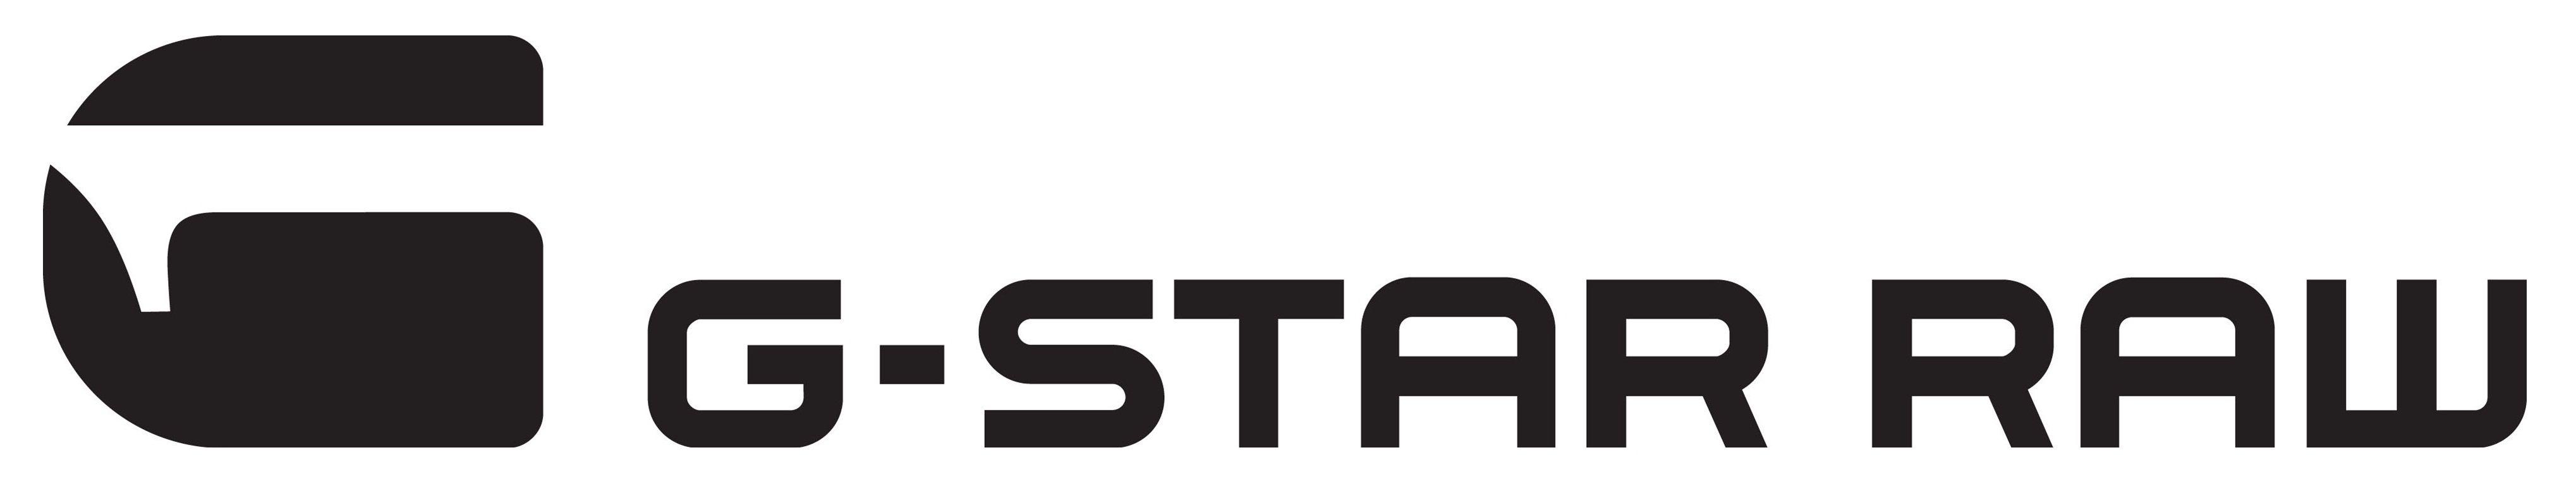 G-Star Logo - G star raw denim Logos